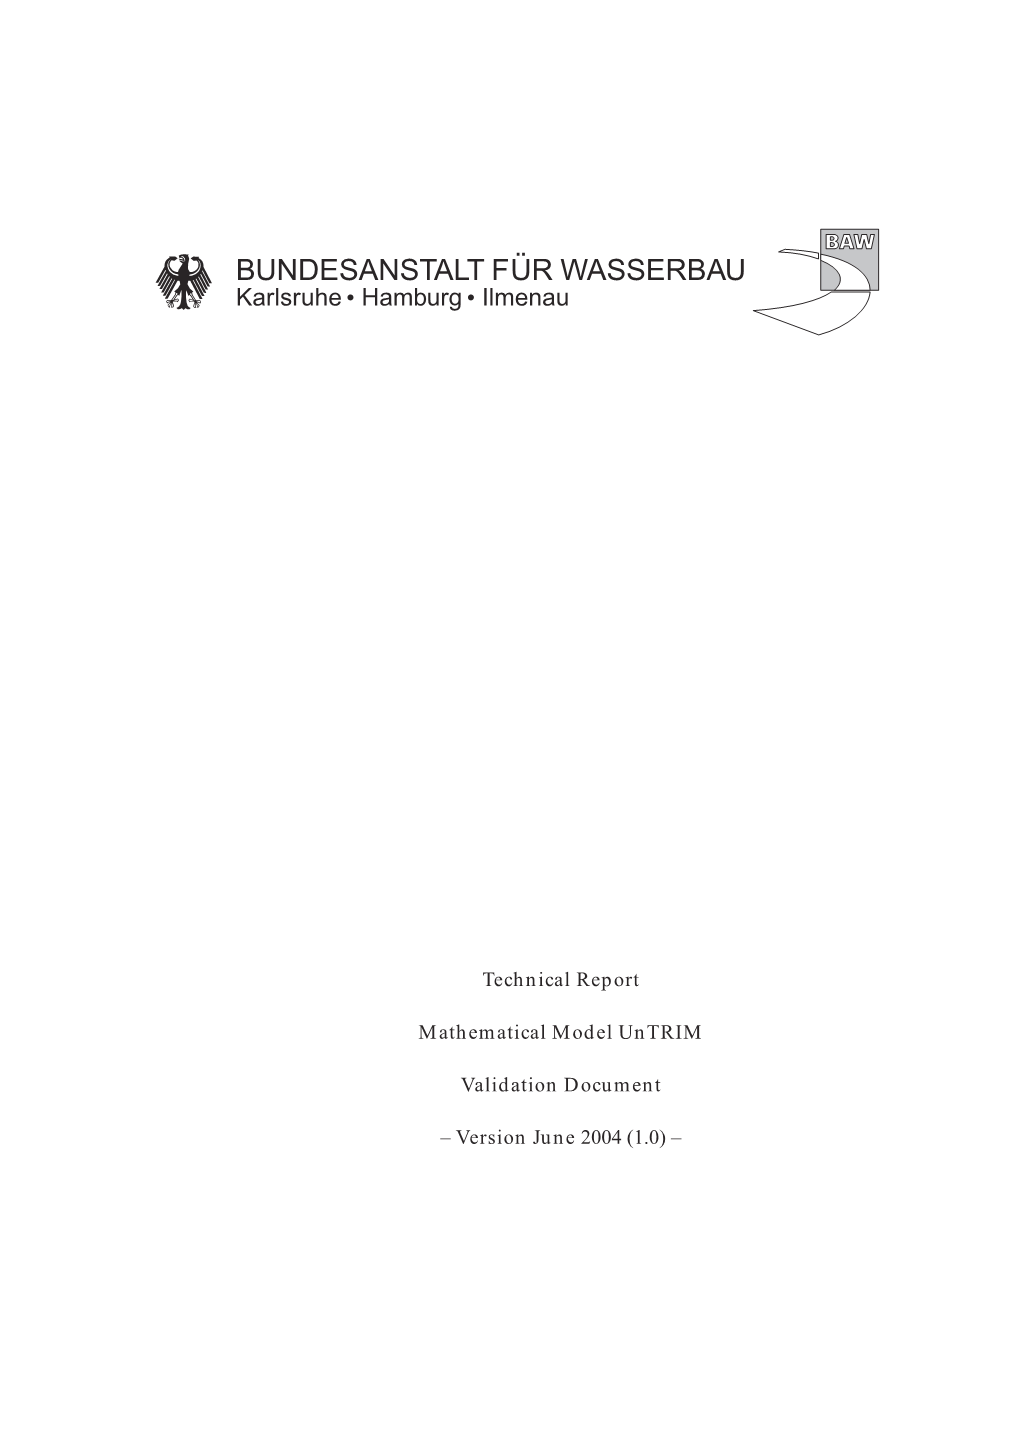 Untrim Validation Document – Version June 2004 (1.0)